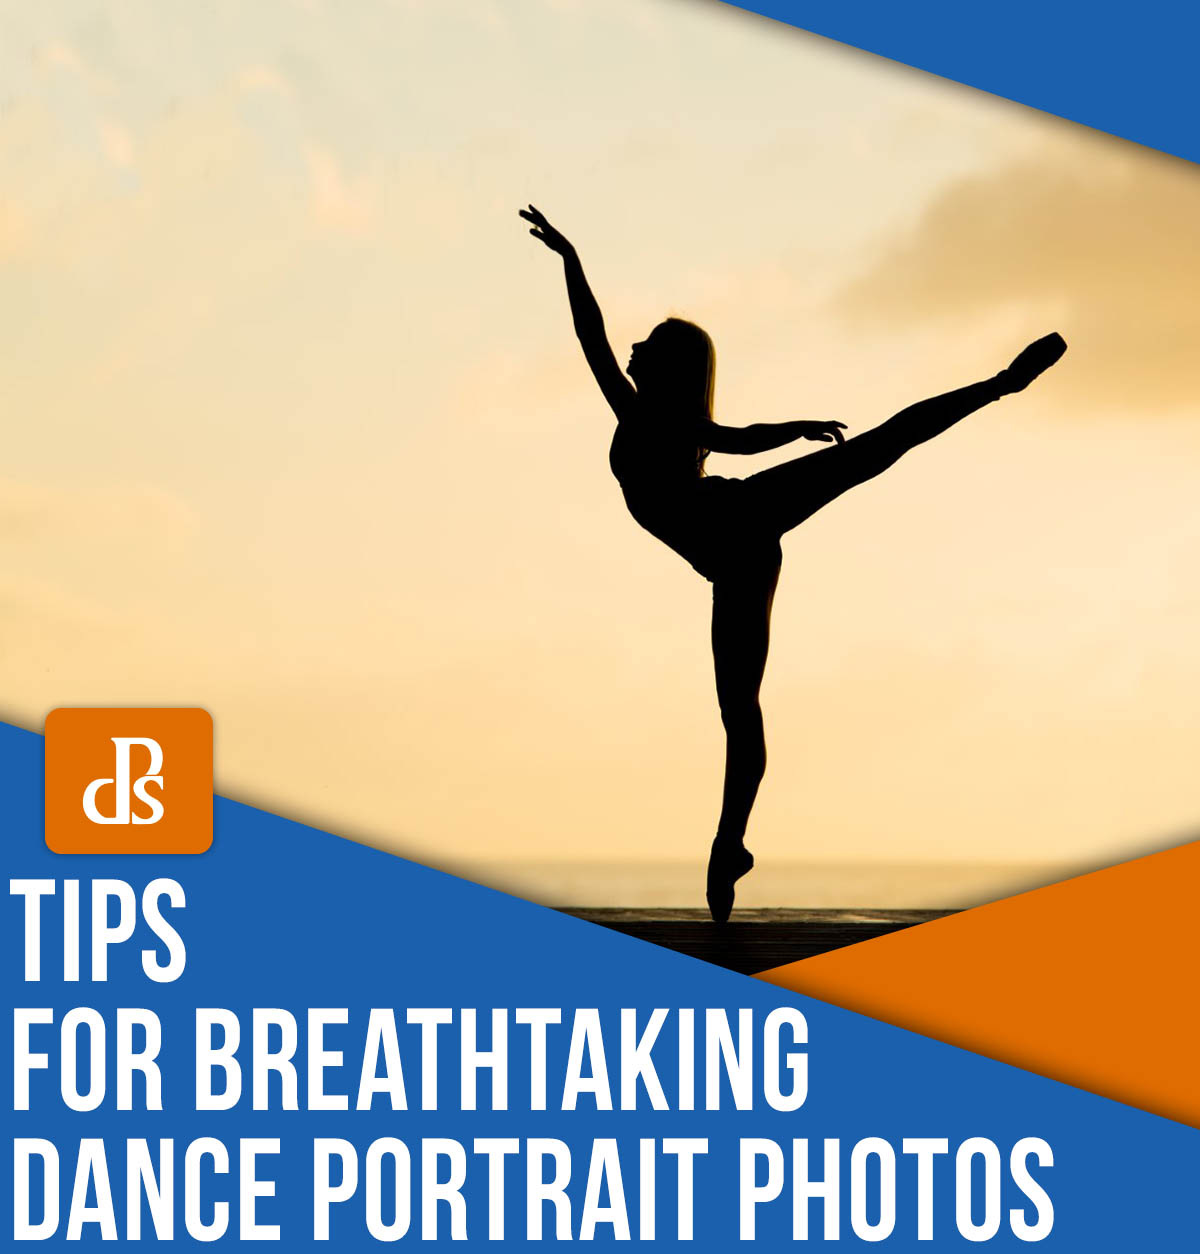 Tips for breathtaking dance portrait photos